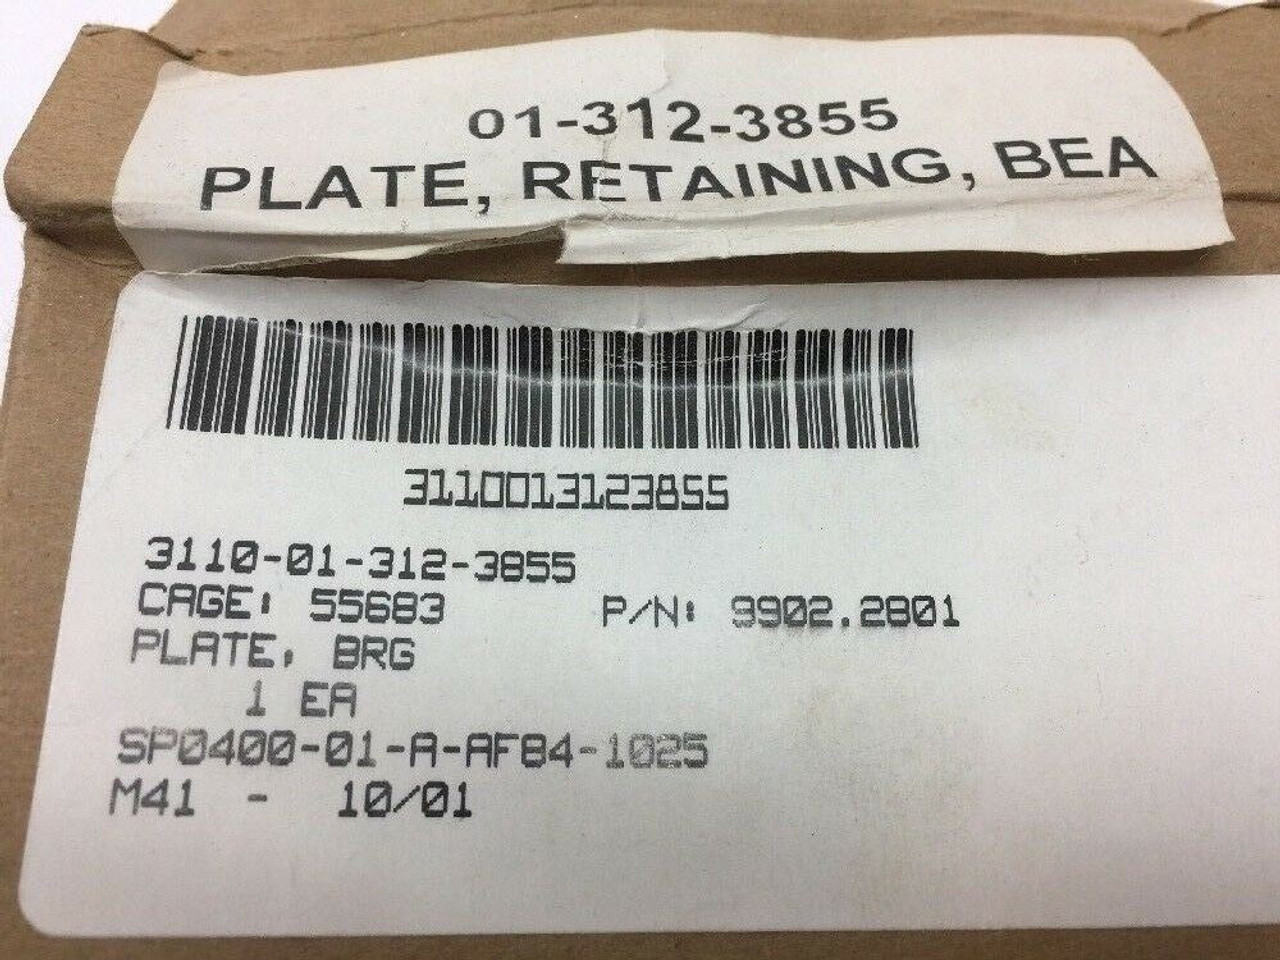 Bearing Retaining Plate 9902.2801 Daimler Trucks